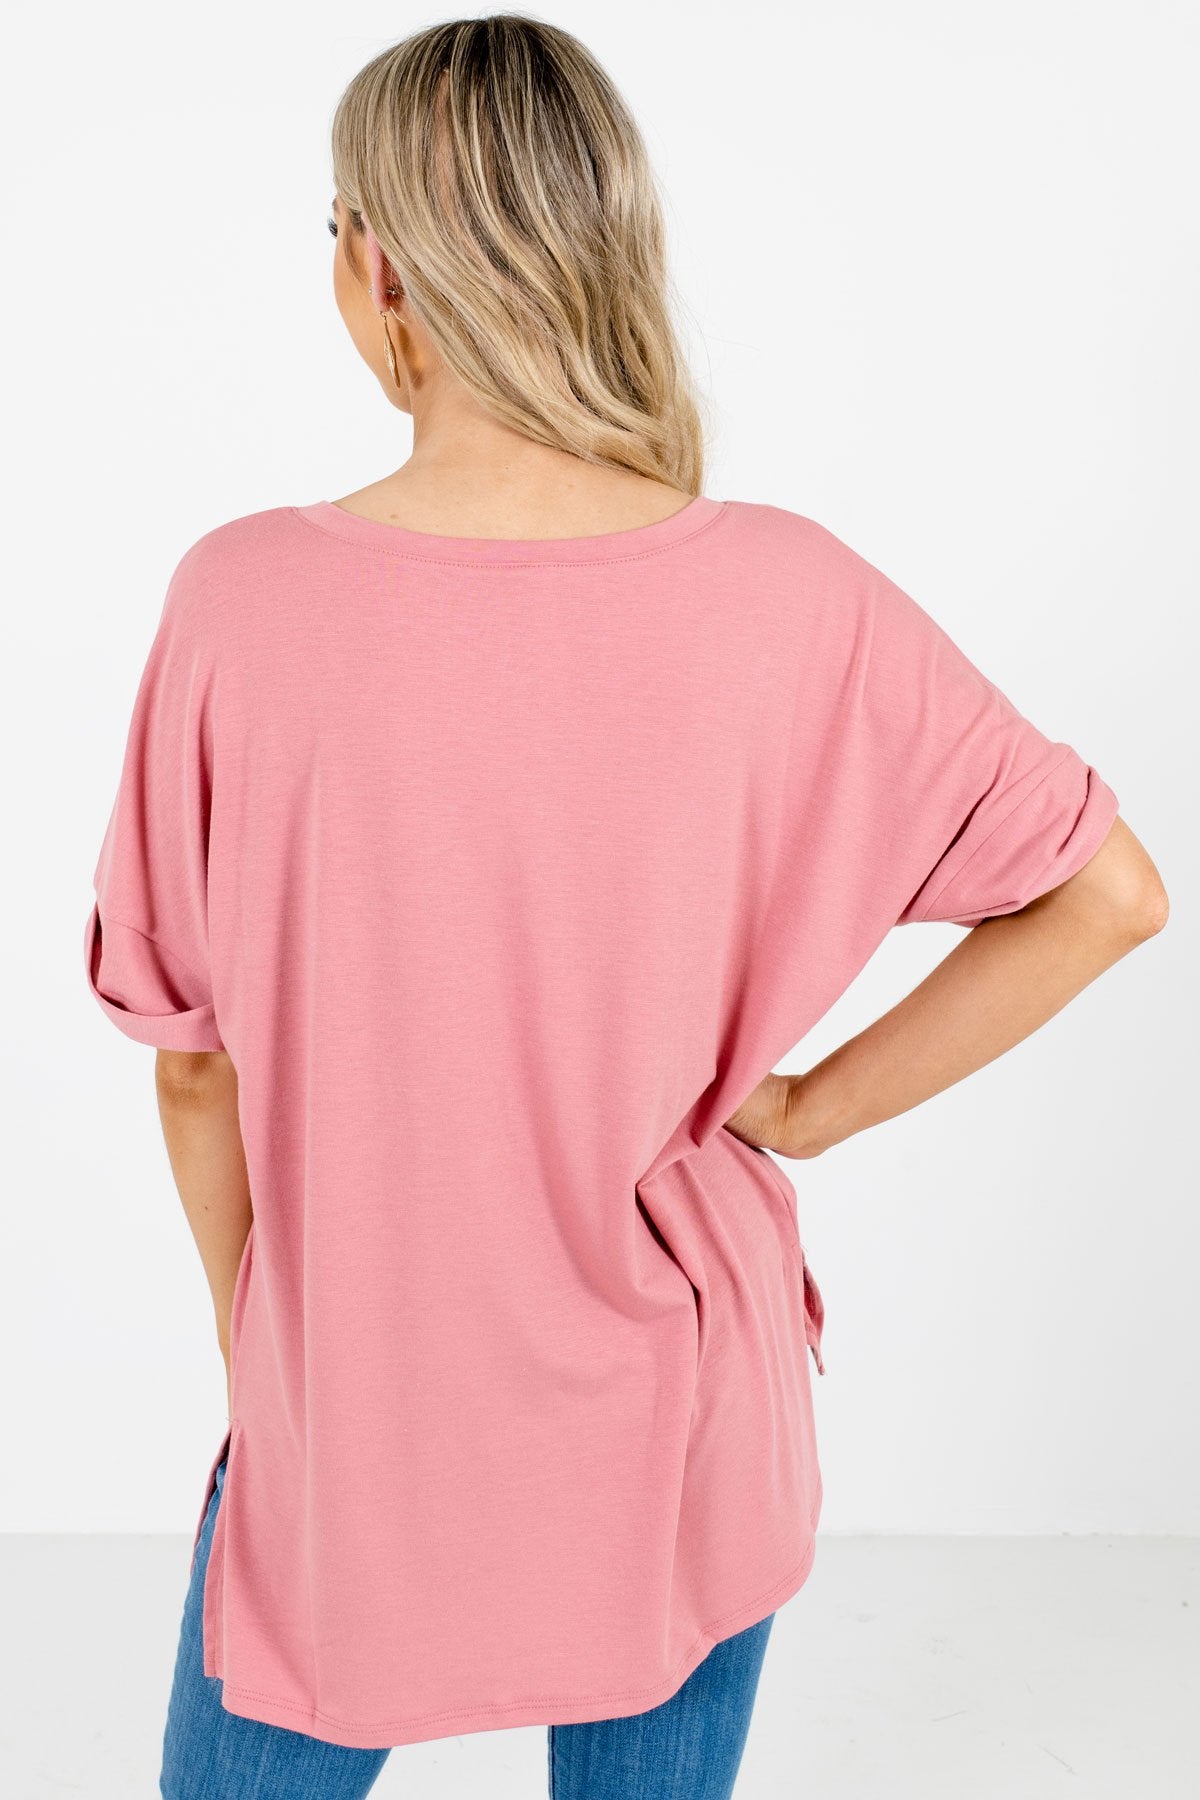 Women's Dusty Pink Cuffed Sleeve Boutique Tops